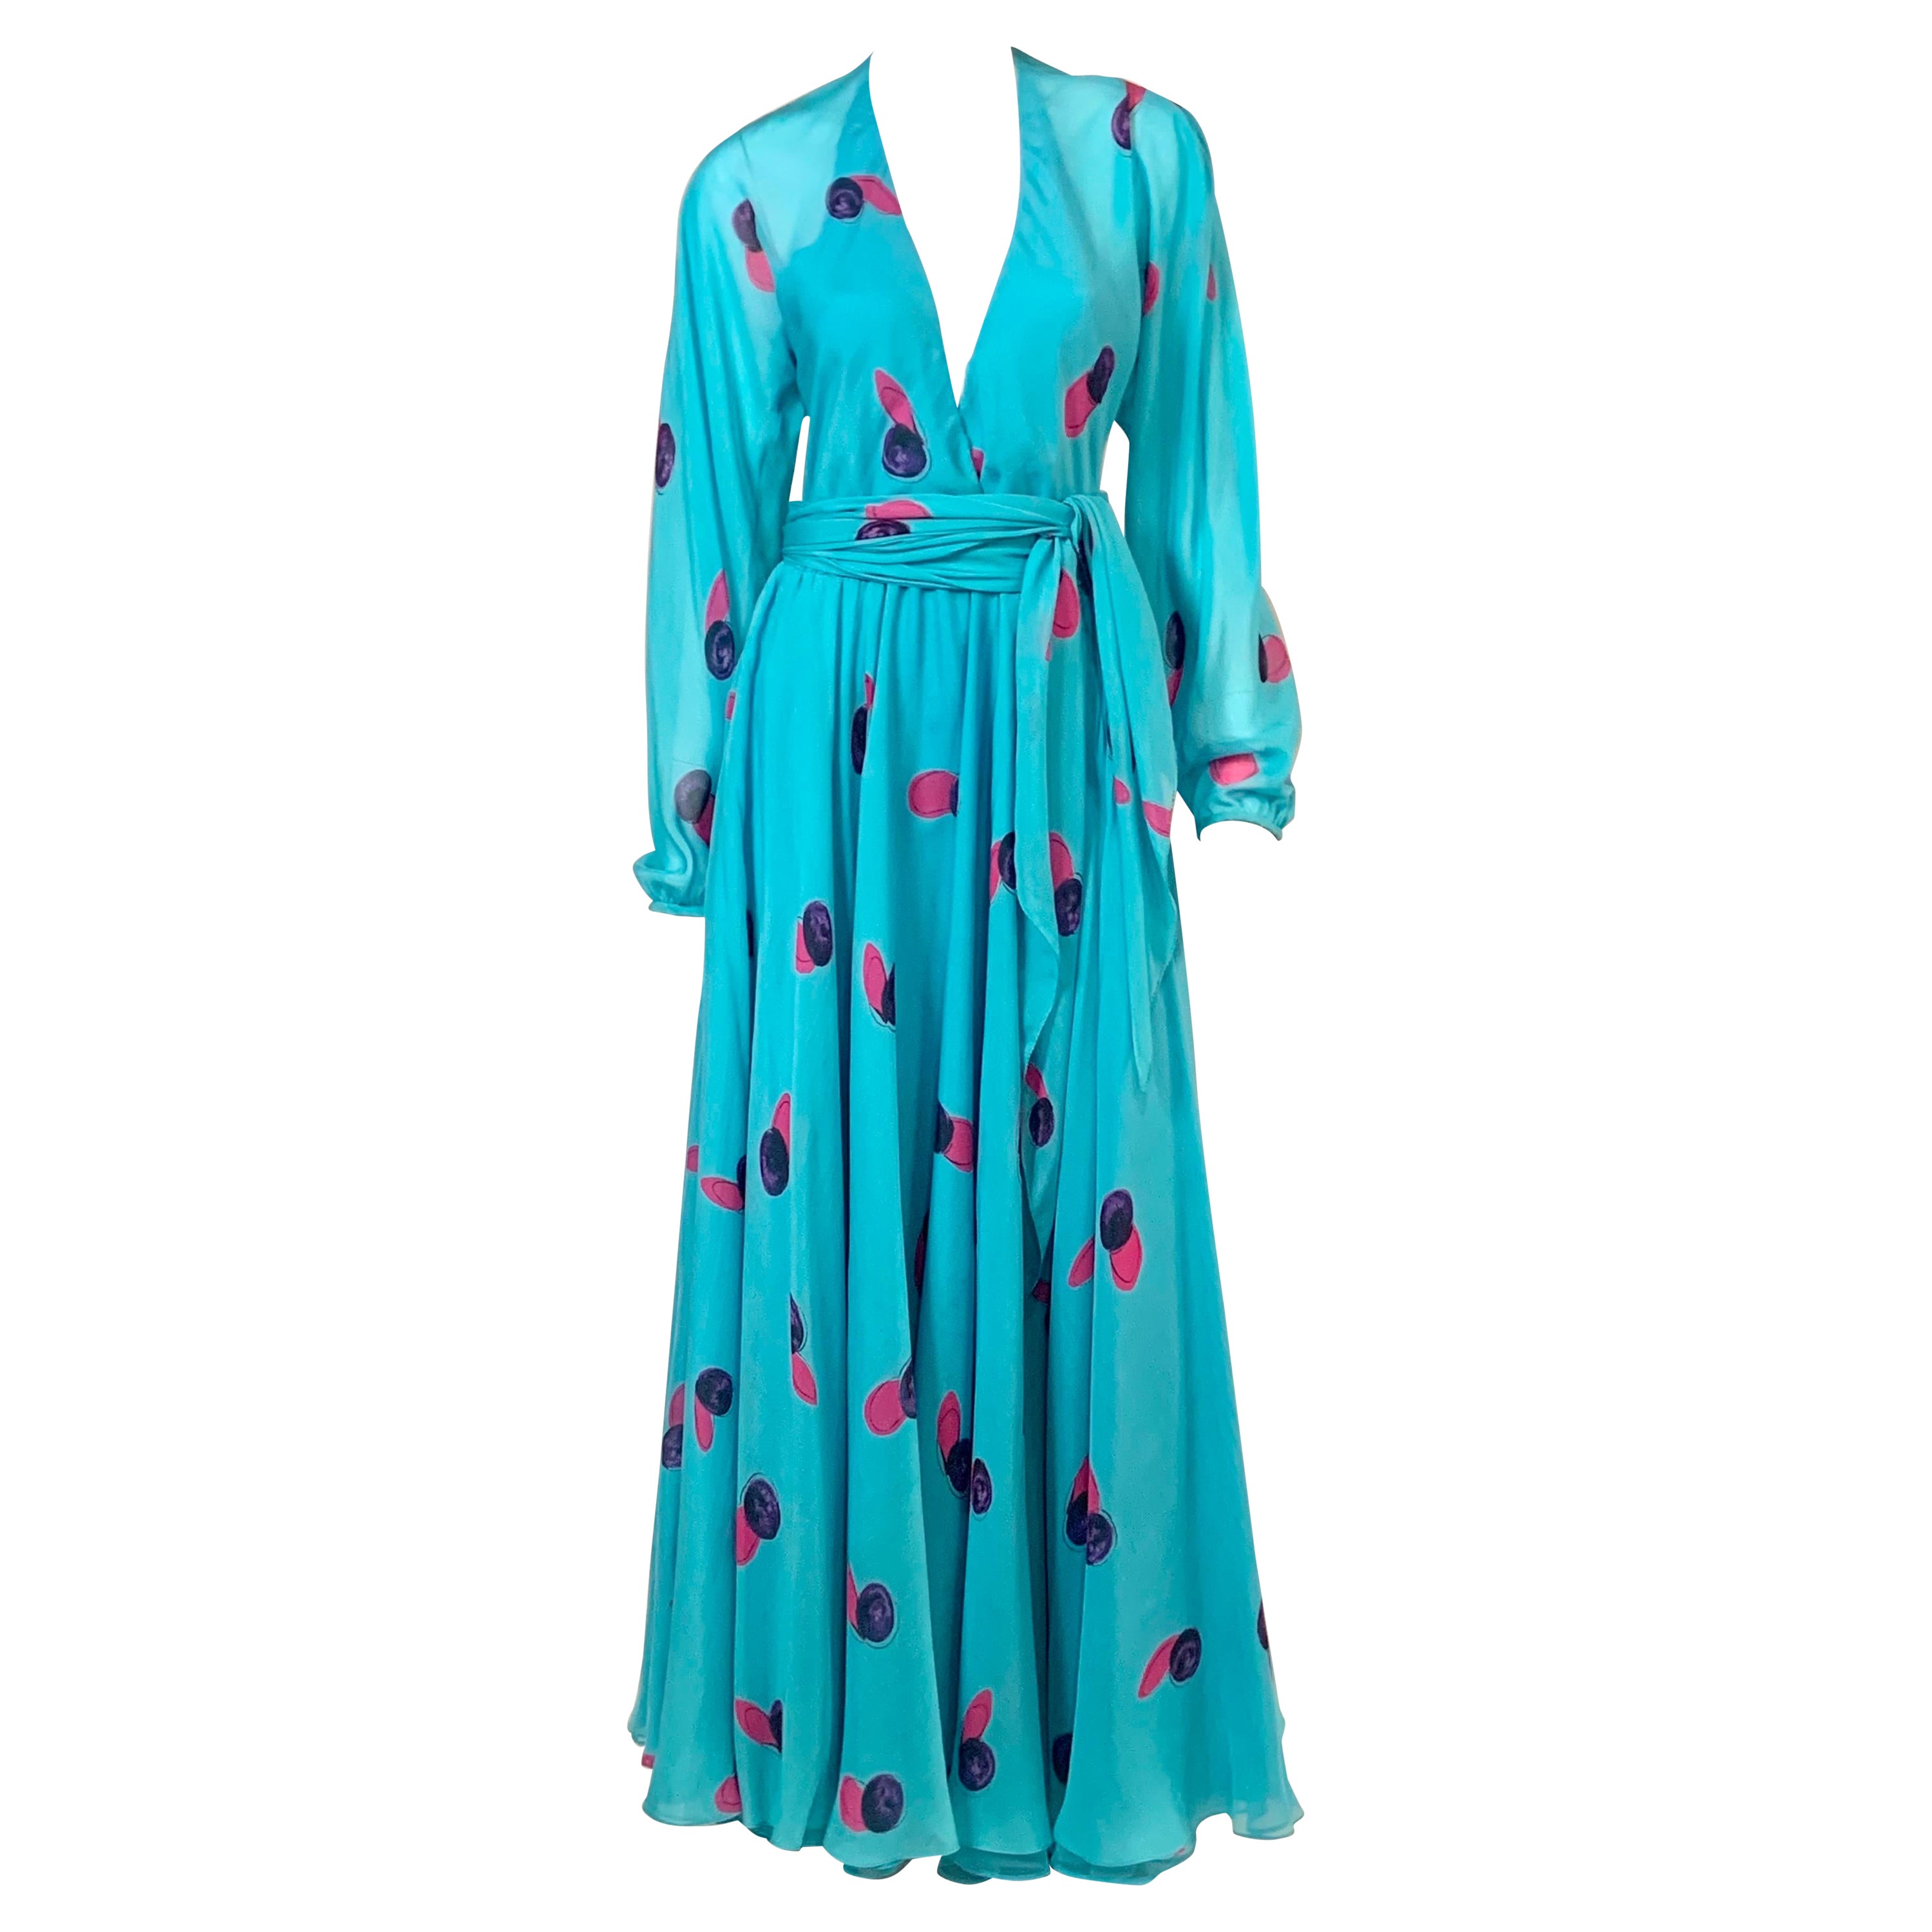 Halston Turquoise Blue Silk Chiffon Dress with Low Neckline 